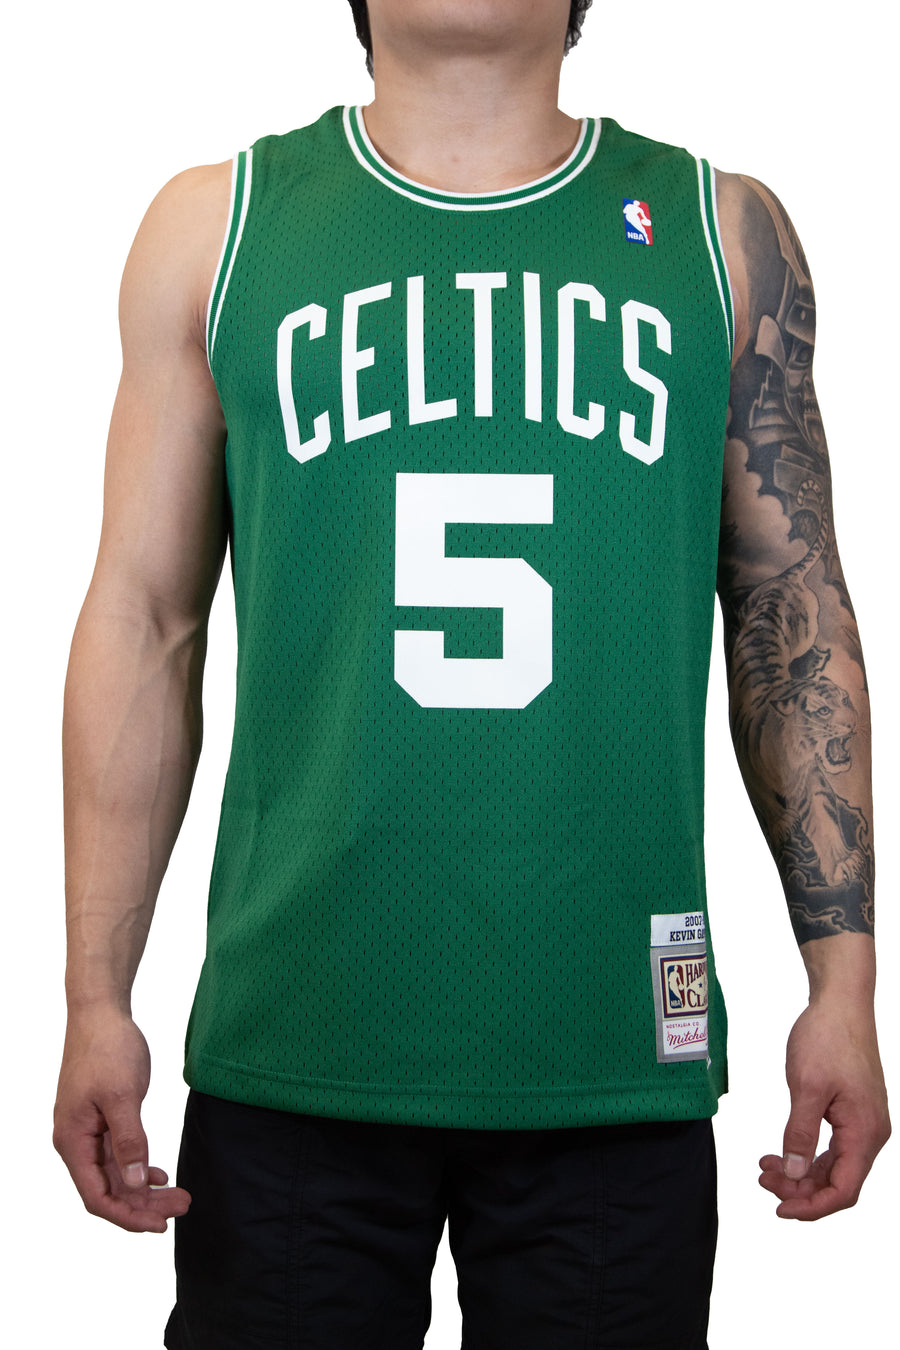 Buy Boston Celtics Jerseys & apparel, Mitchell & Ness